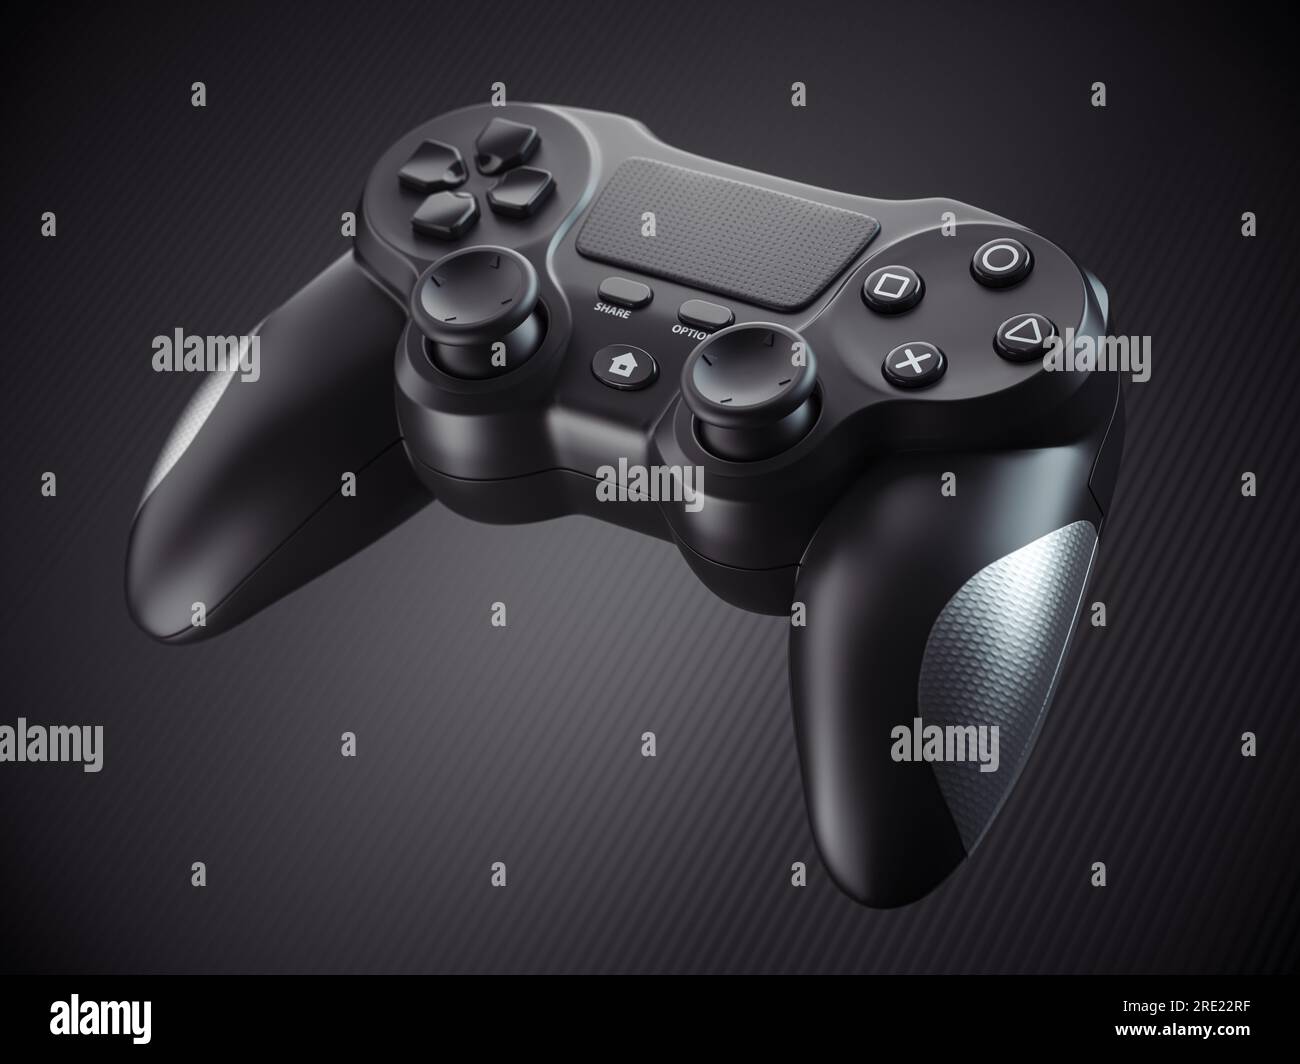 Game joystick or gaming controller on black background. 3d illustration Stock Photo